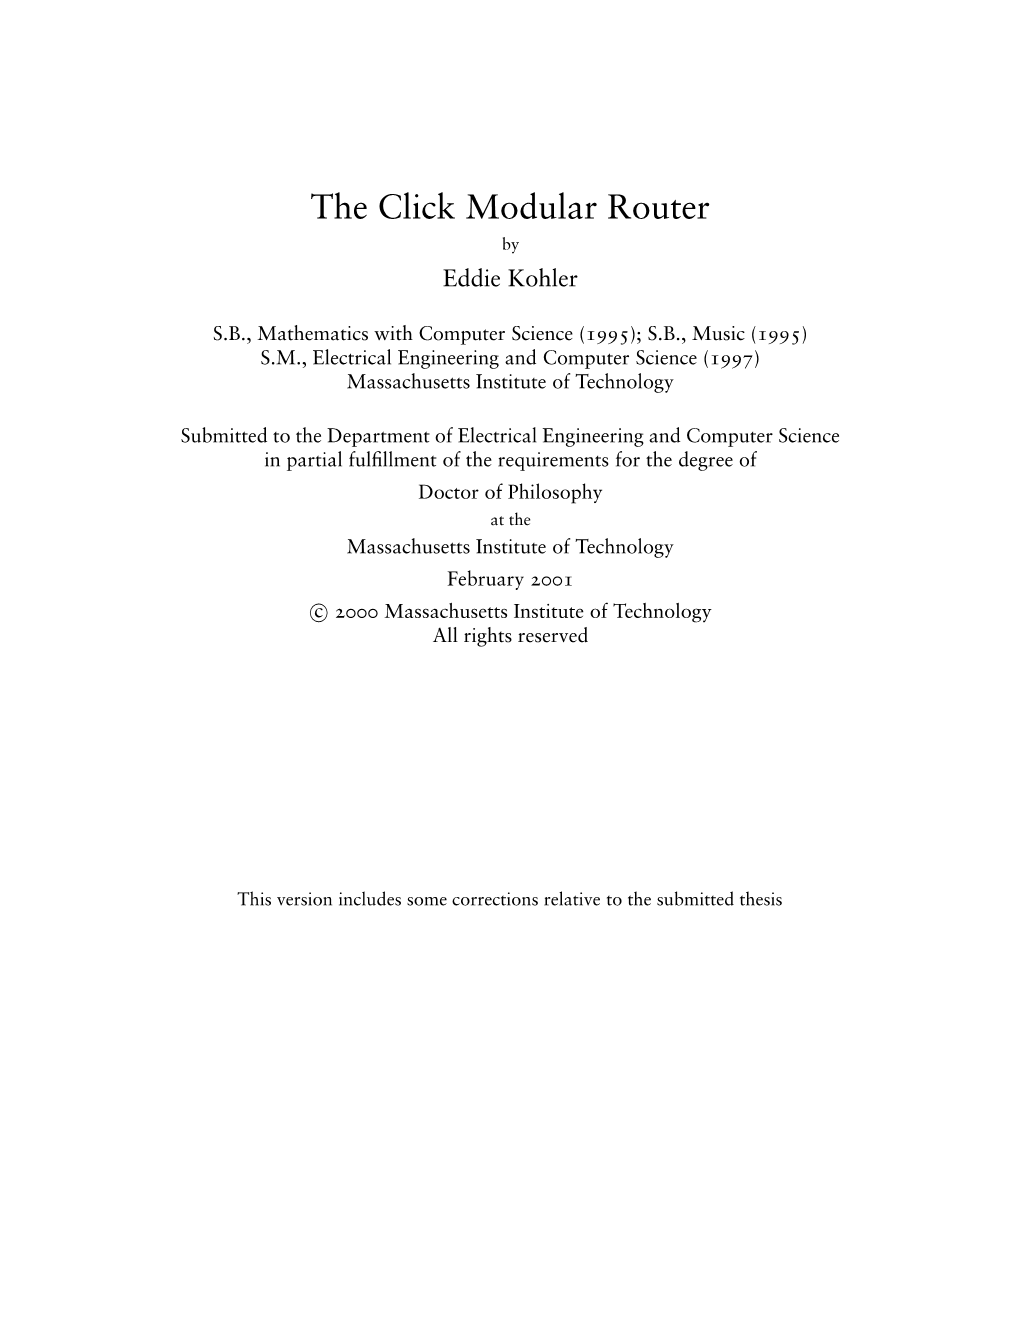 The Click Modular Router by Eddie Kohler